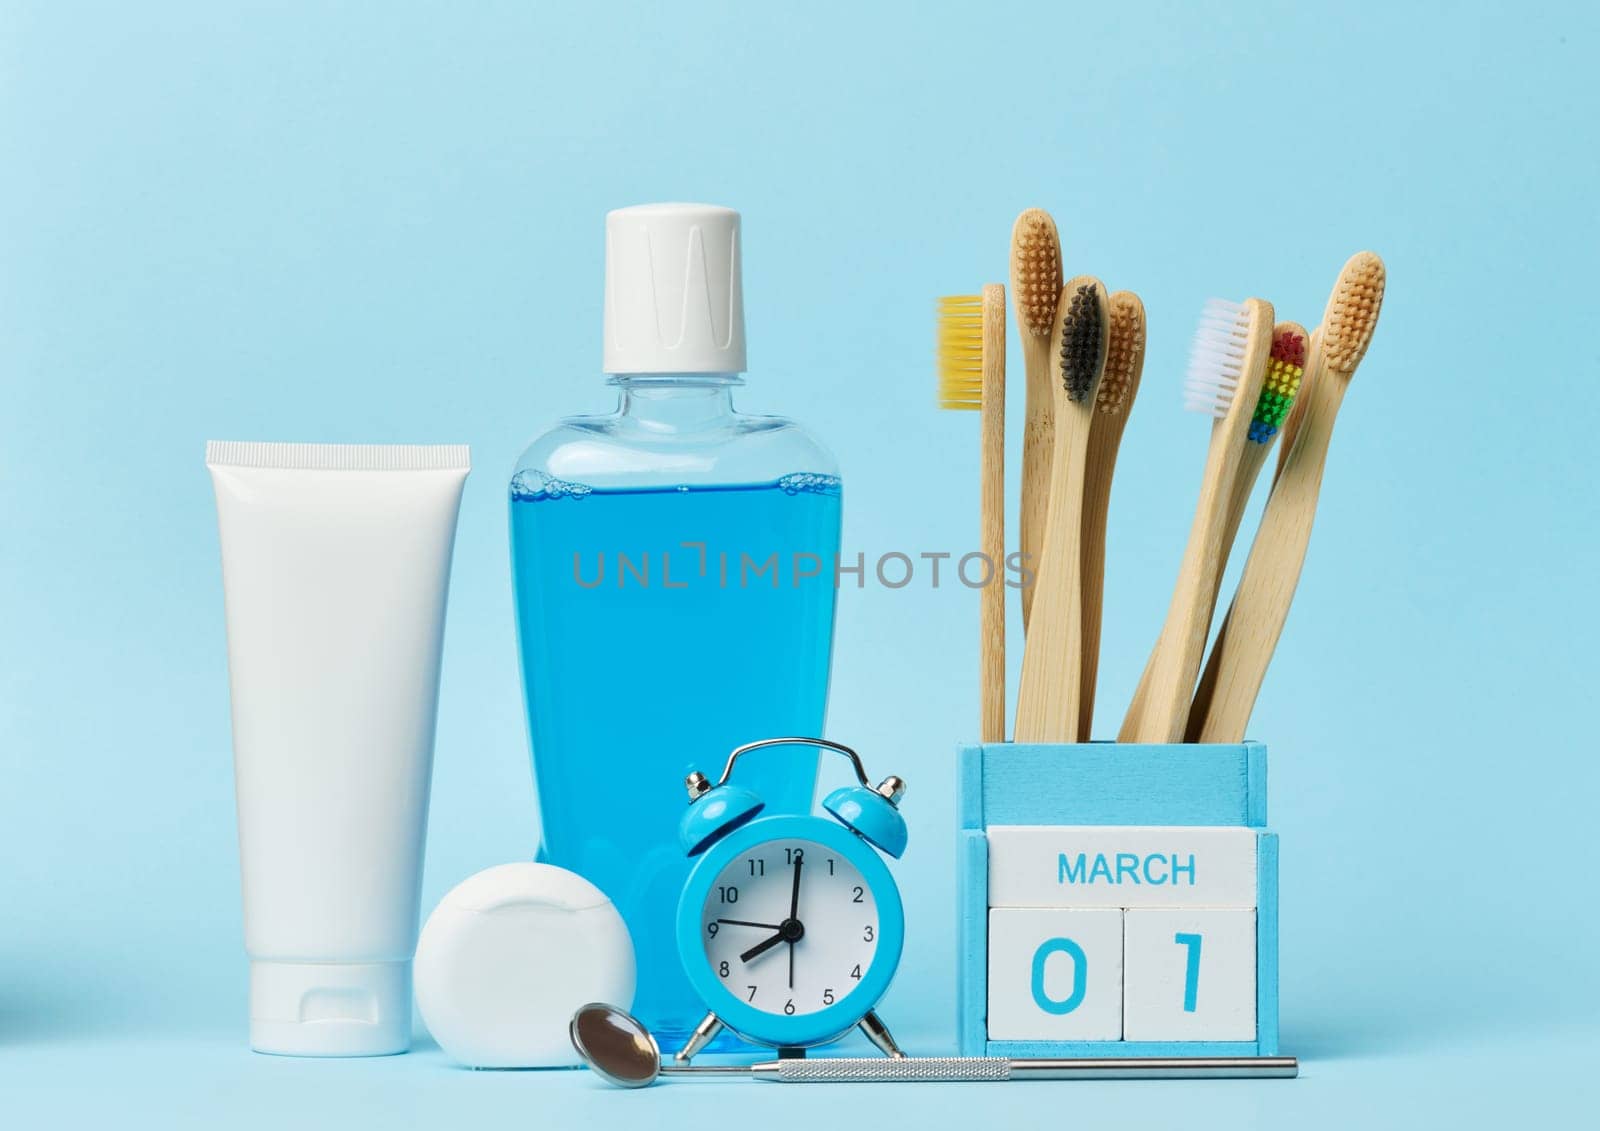 Mouthwash and toothpaste tube, alarm clock on blue background by ndanko